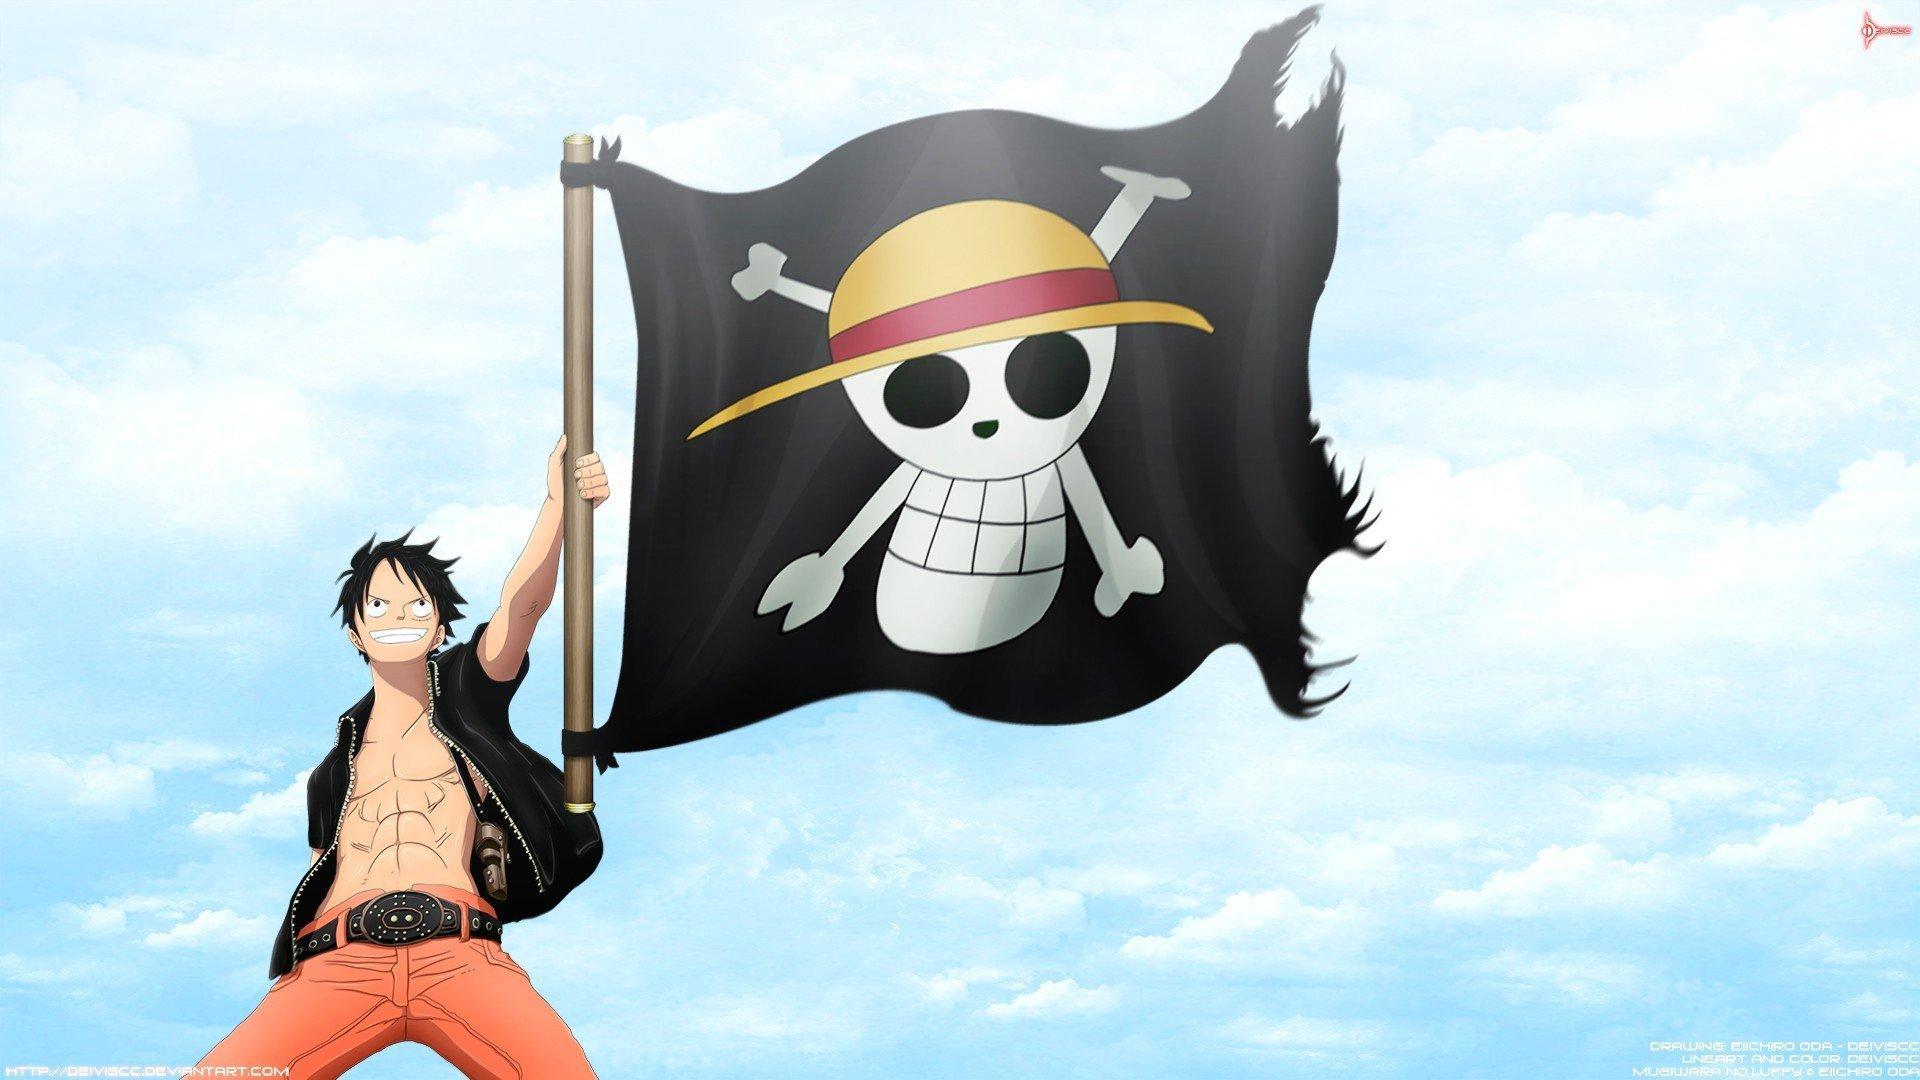 HD wallpaper, 1920X1080 One Piece Monkey D Luffy Straw Hat Pirates Jolly Roger Pirate Flag Wallpaper Jpg 209 Kb